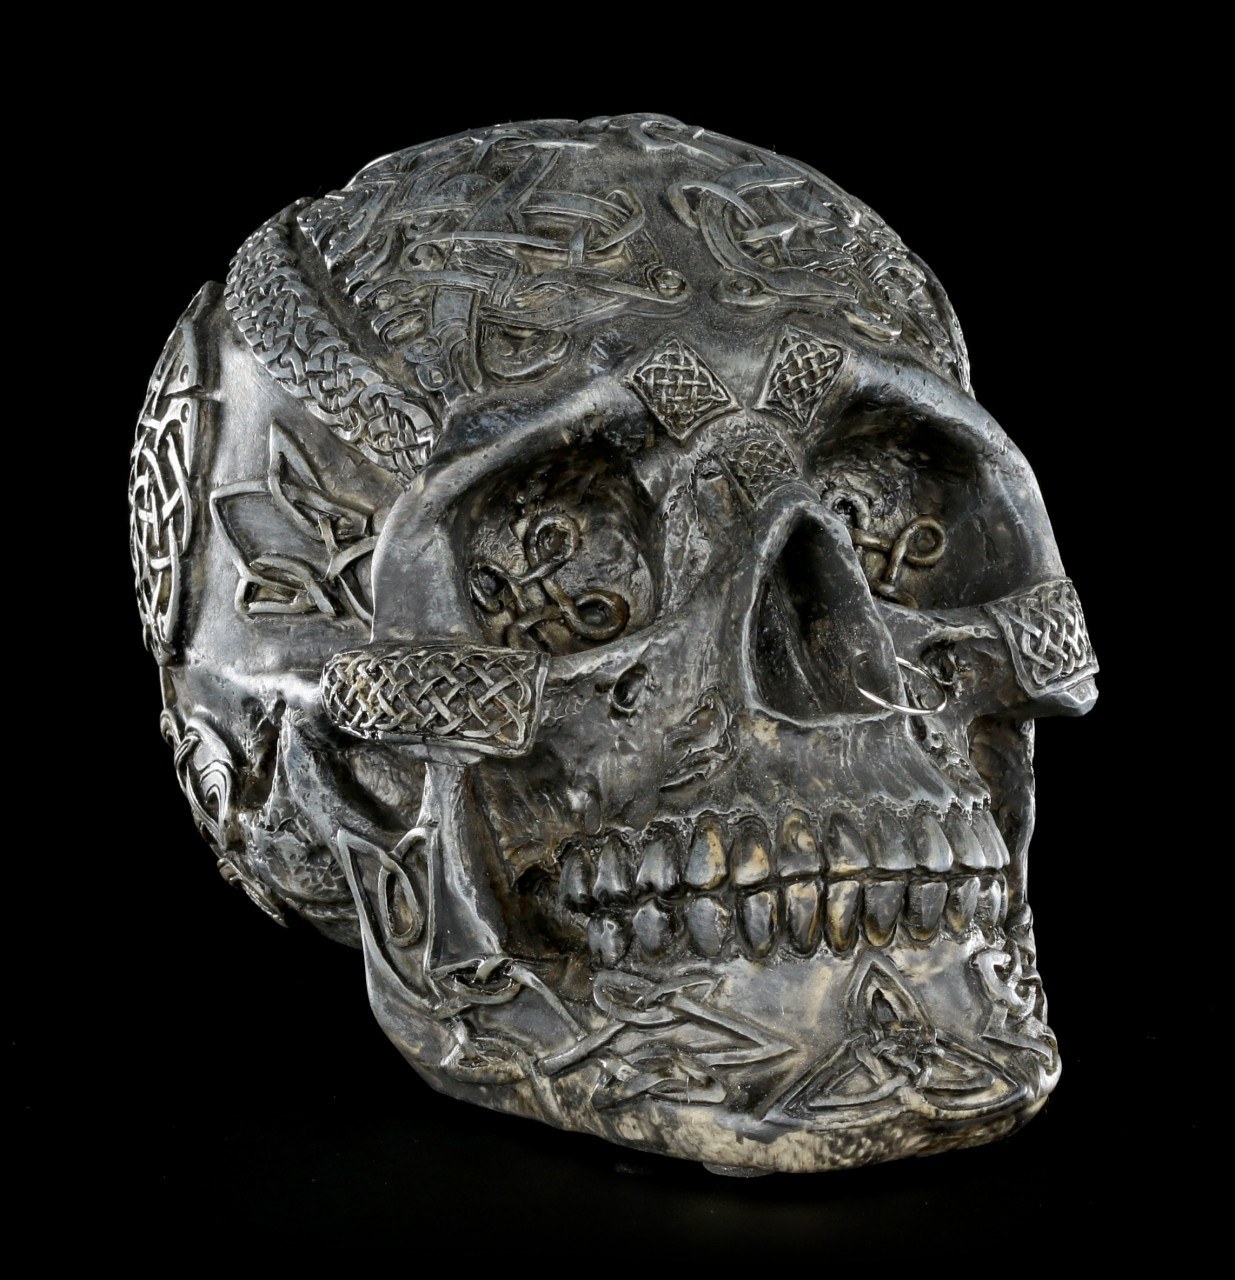 Skull - Celtic Design with Nosering